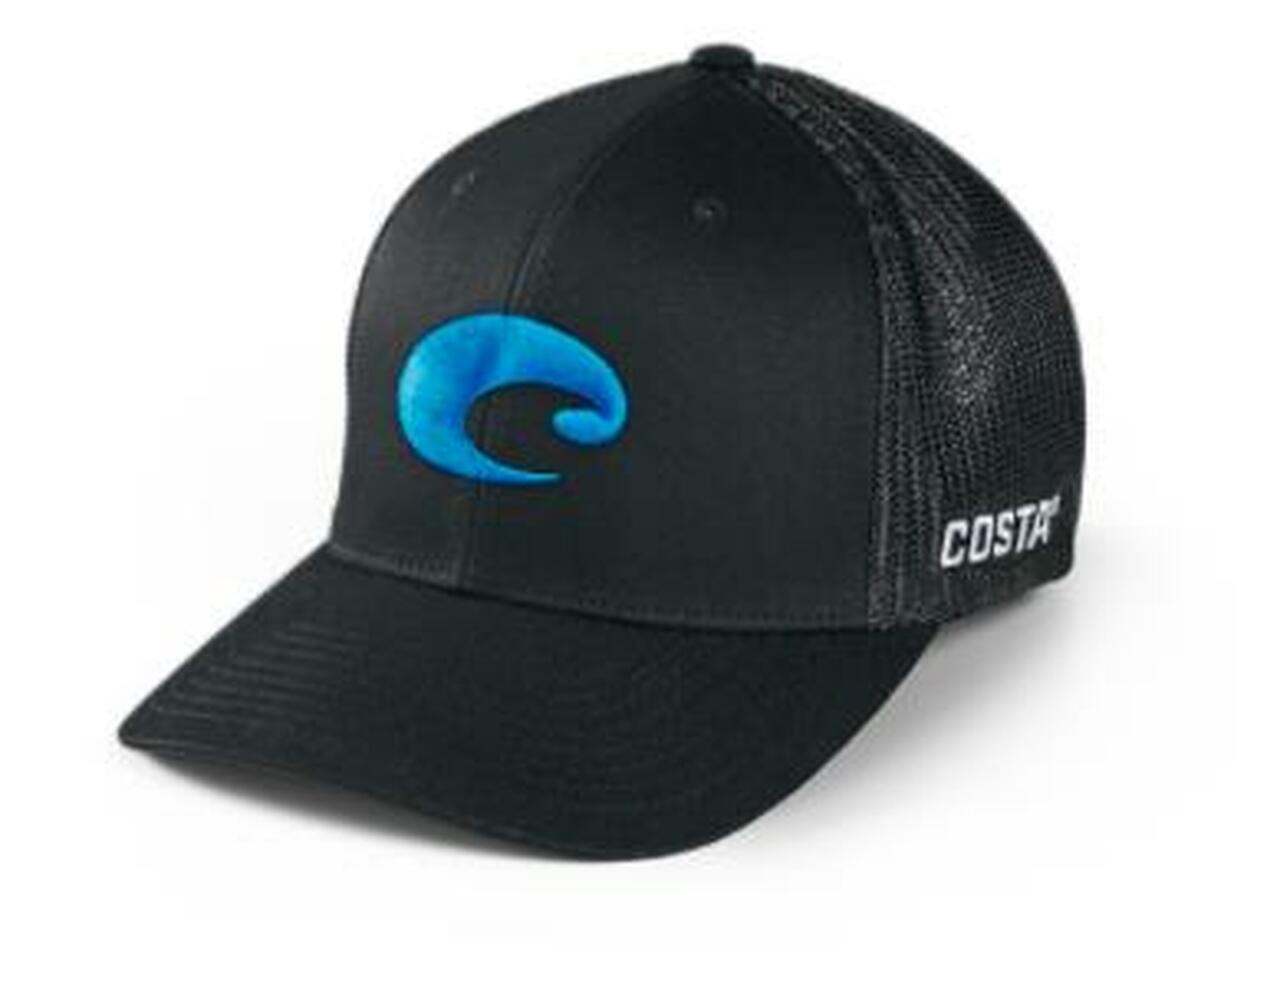 New Authentic Costa Flex Fit Trucker Black/Blue C